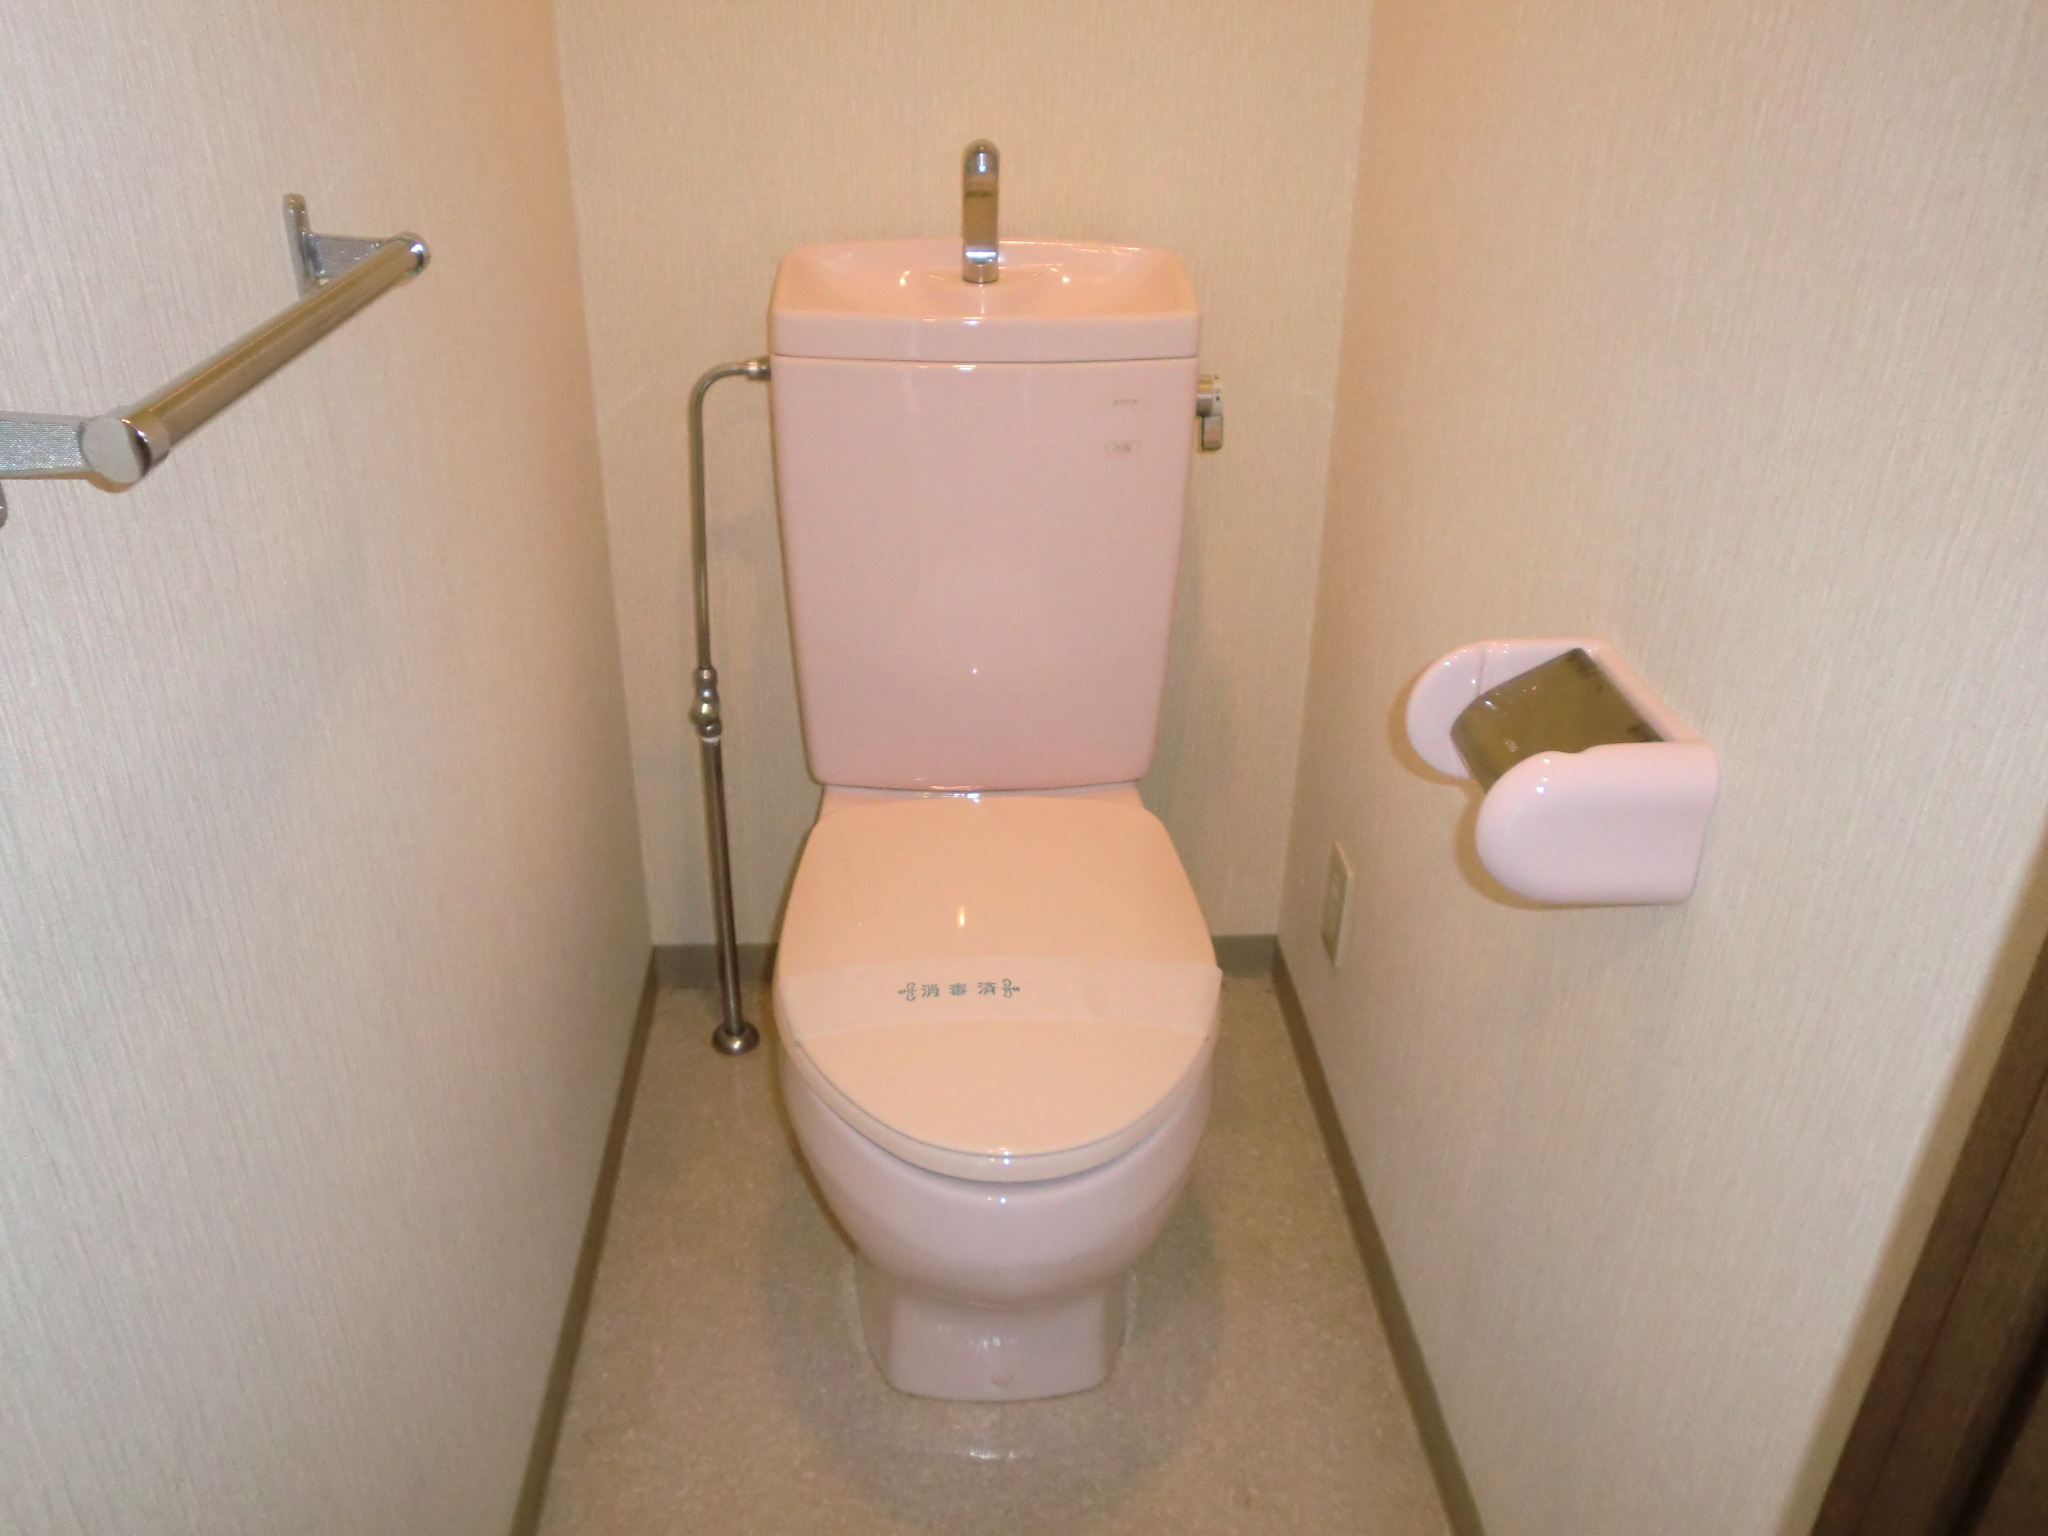 Toilet. Toilet of pastel color